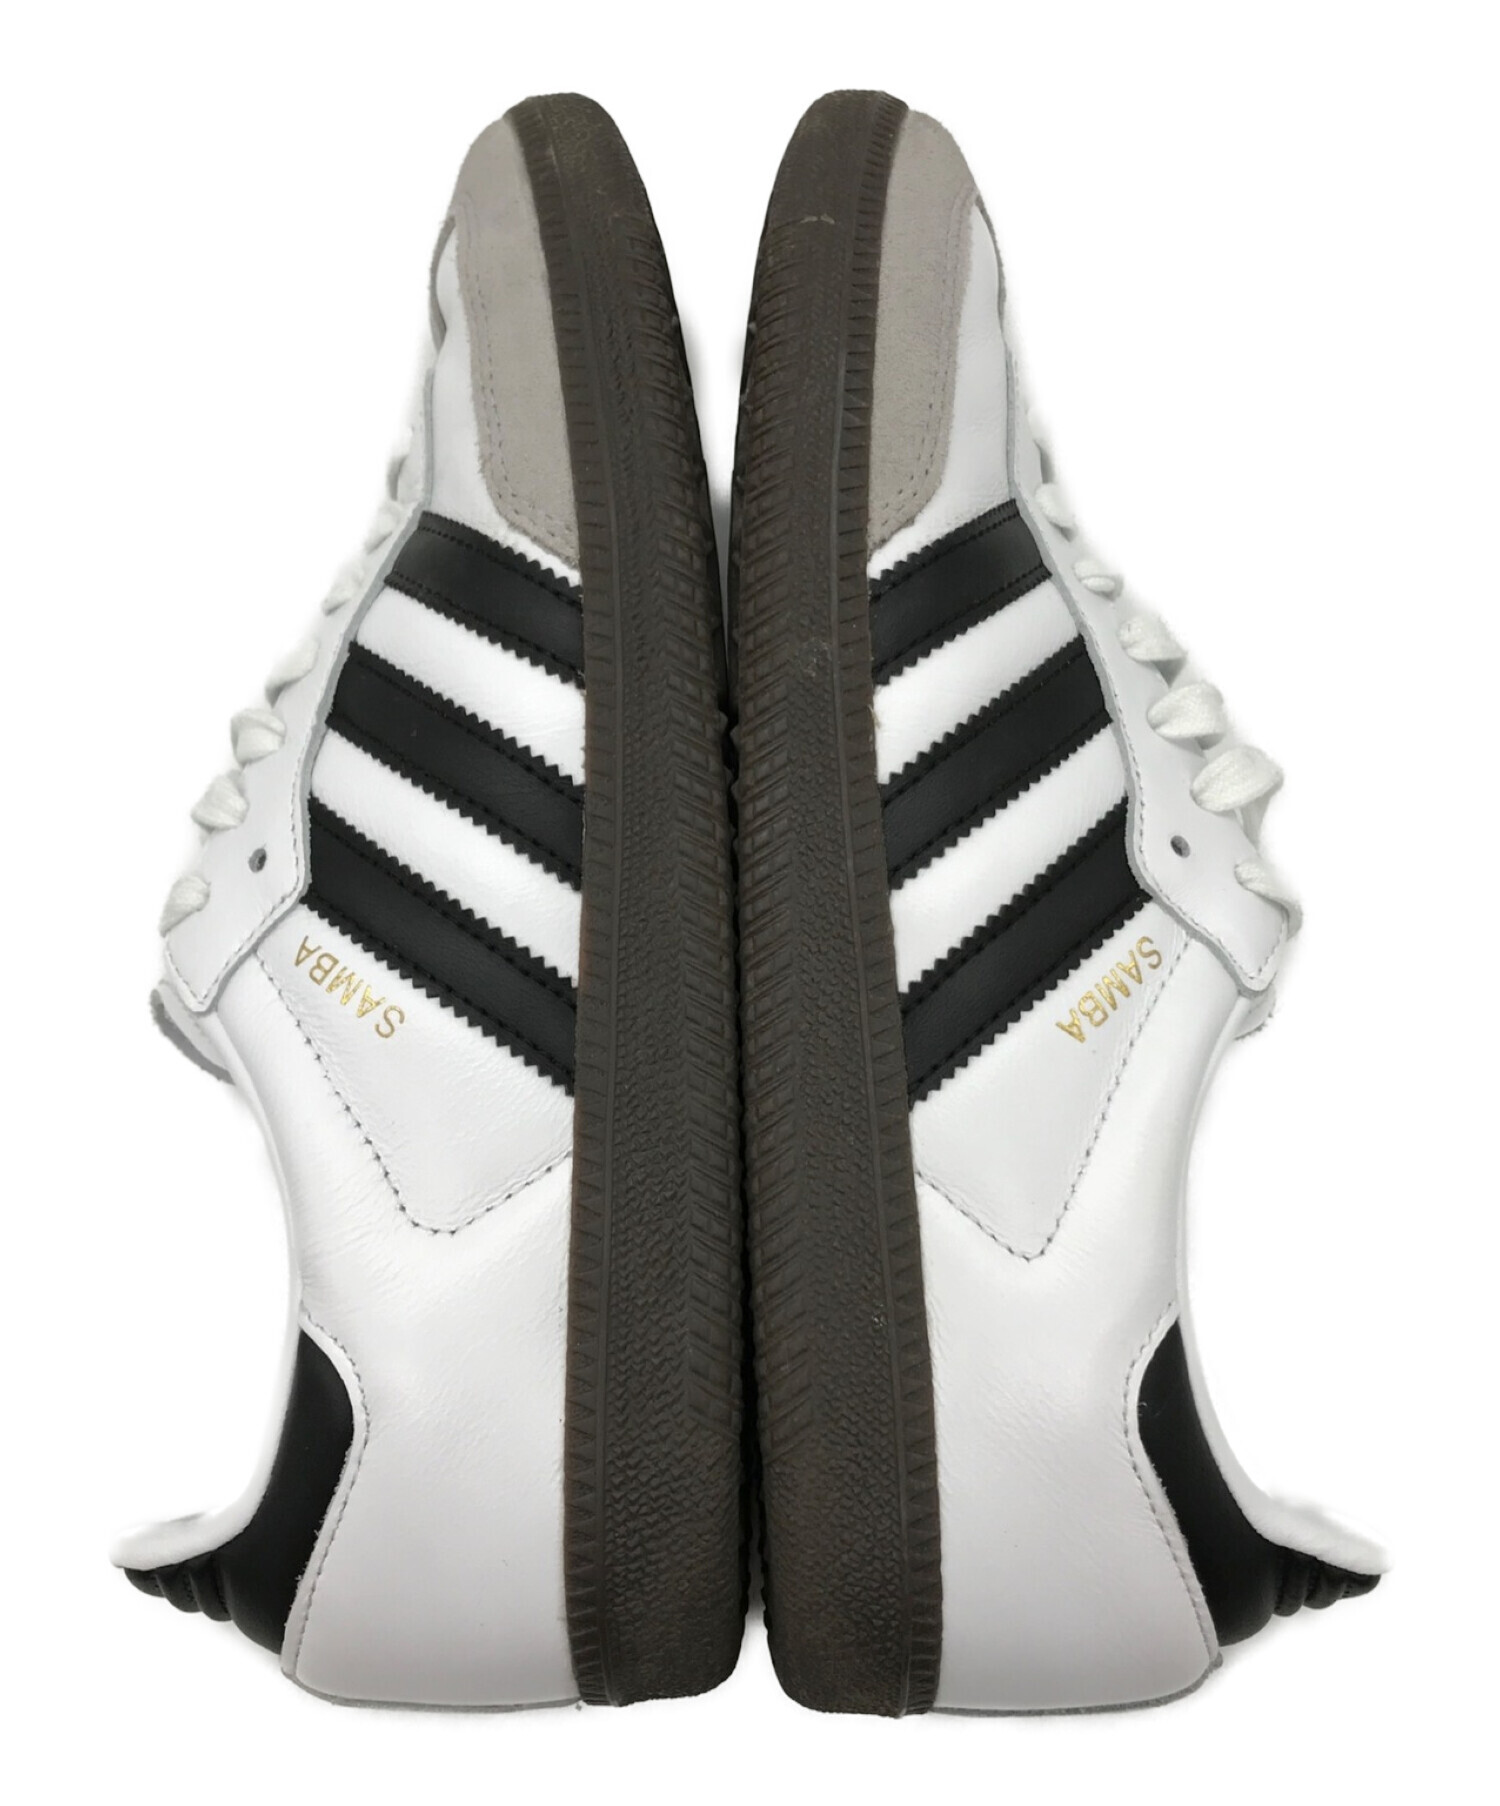 adidas (アディダス) Samba OG(サンバ オージー) Black & White サイズ:26